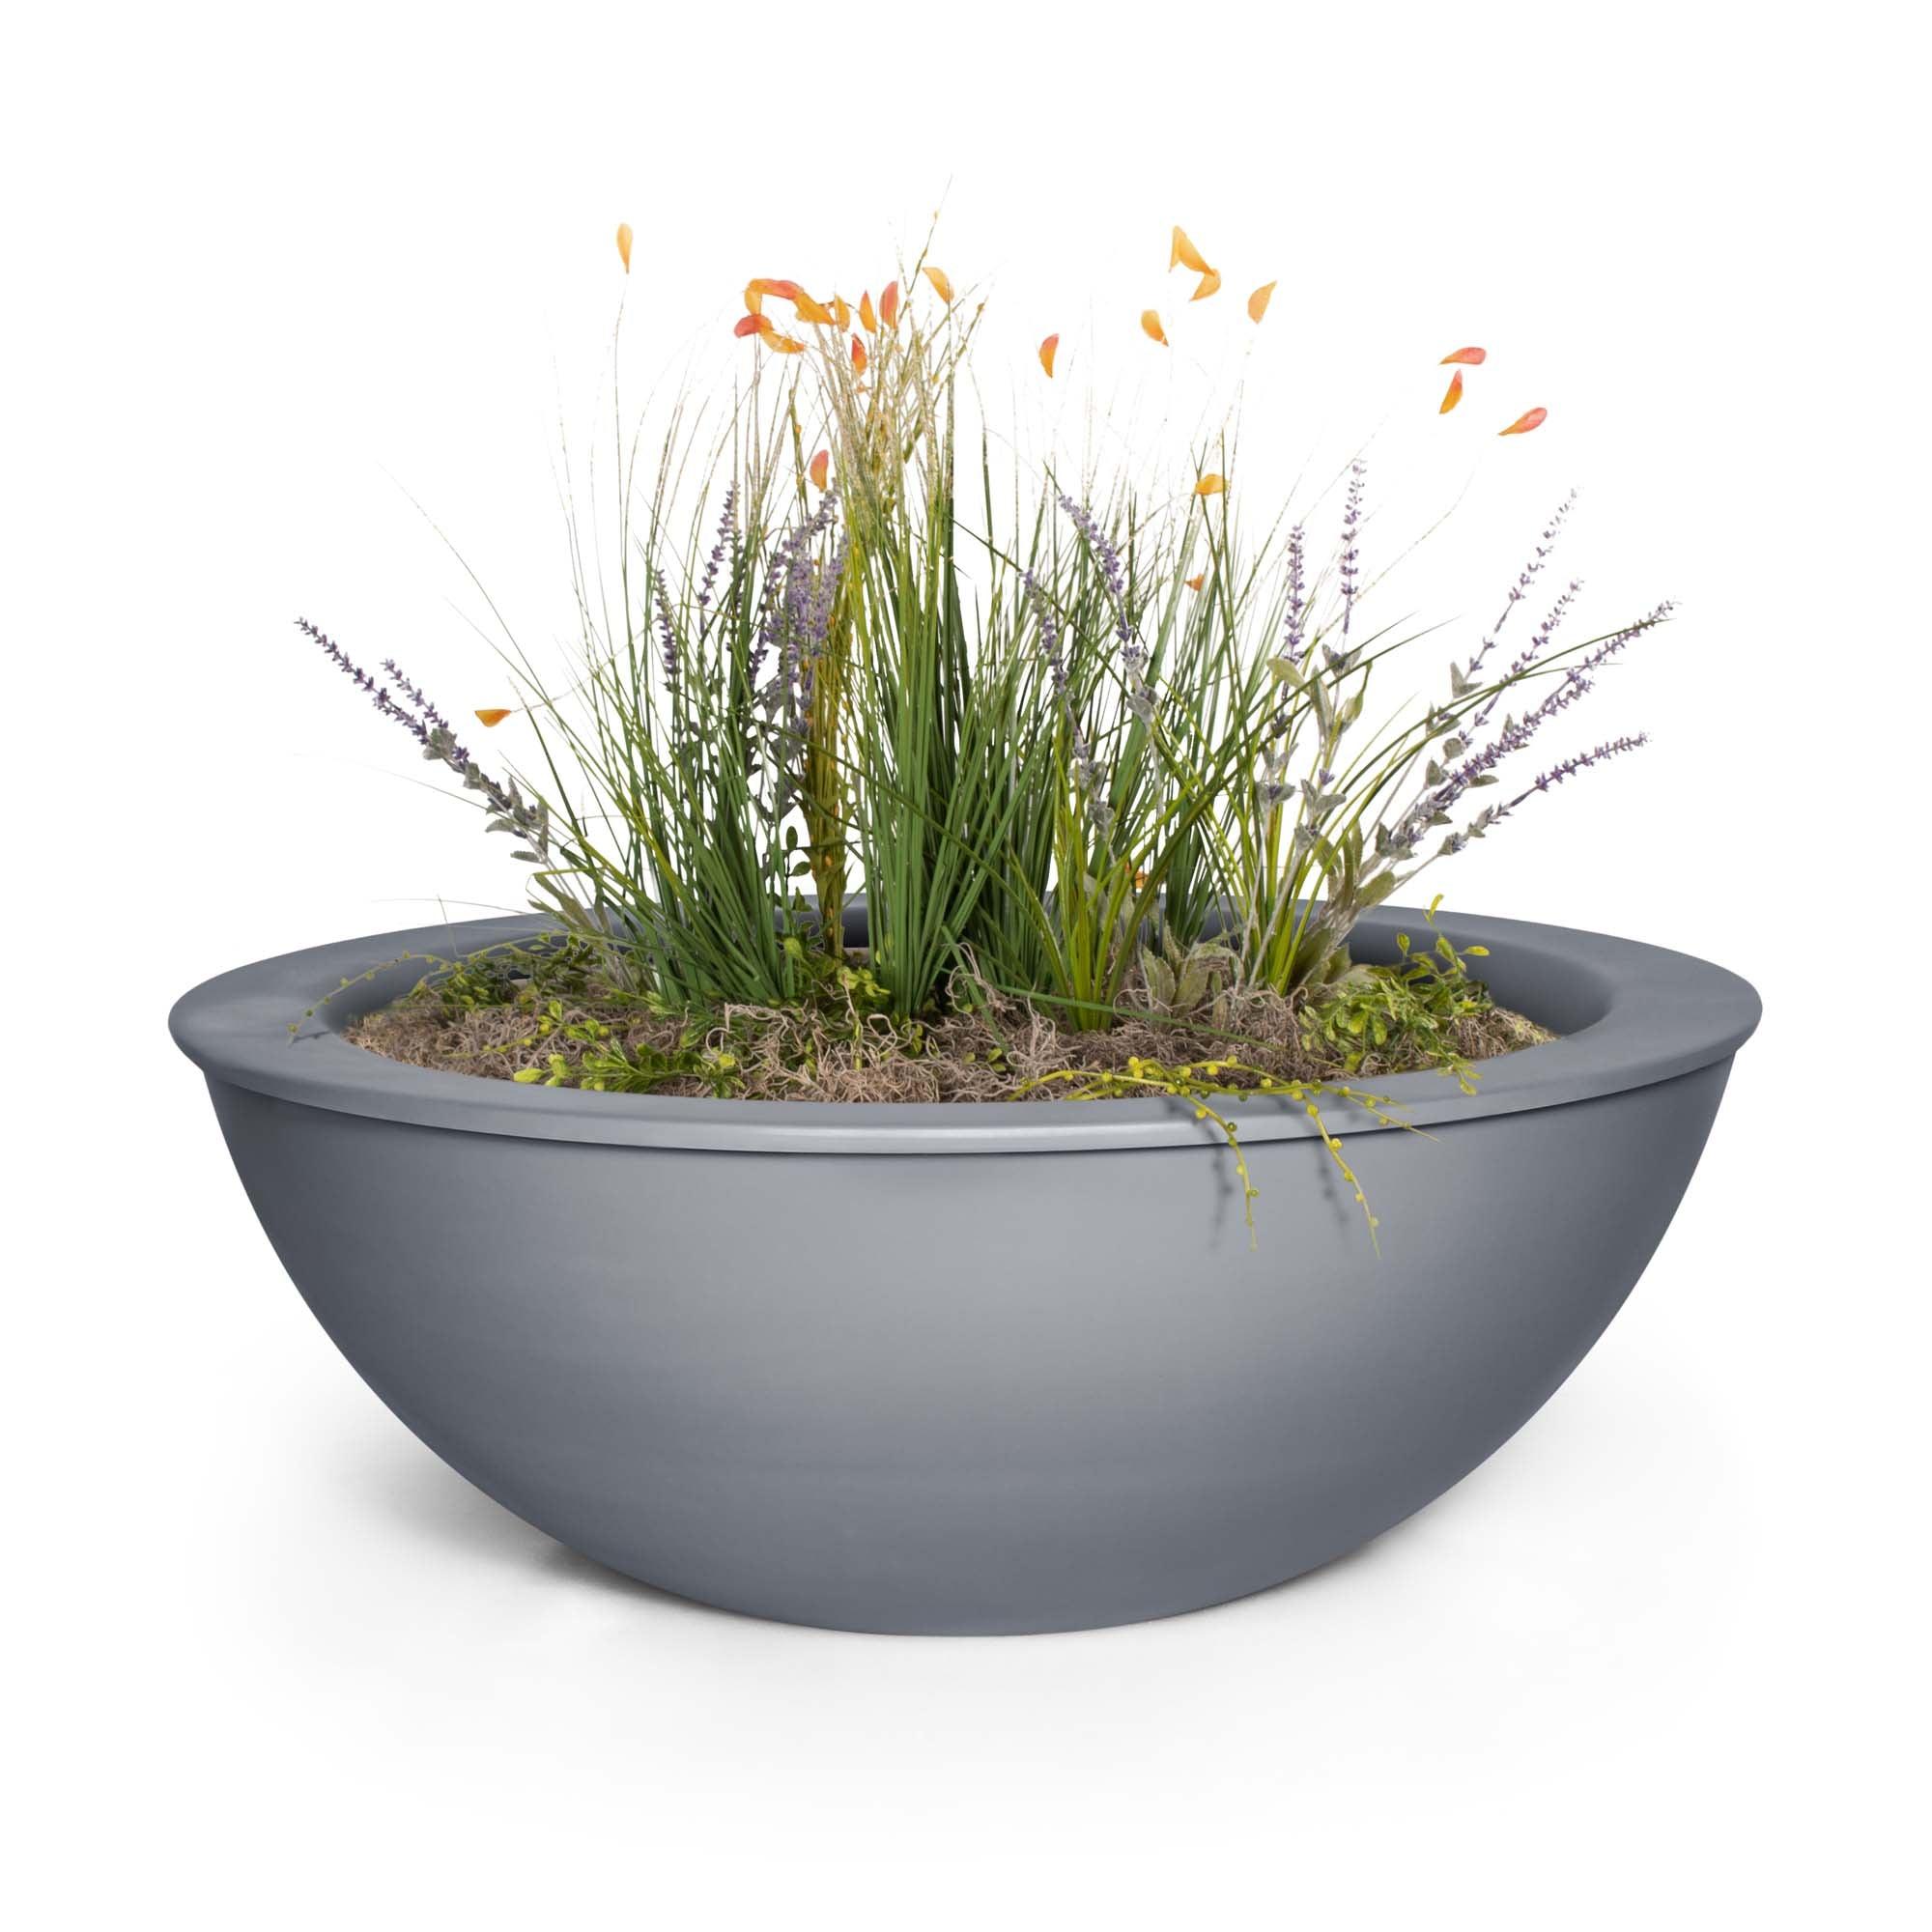 The Outdoor Plus Sedona Planter Bowl - Metals